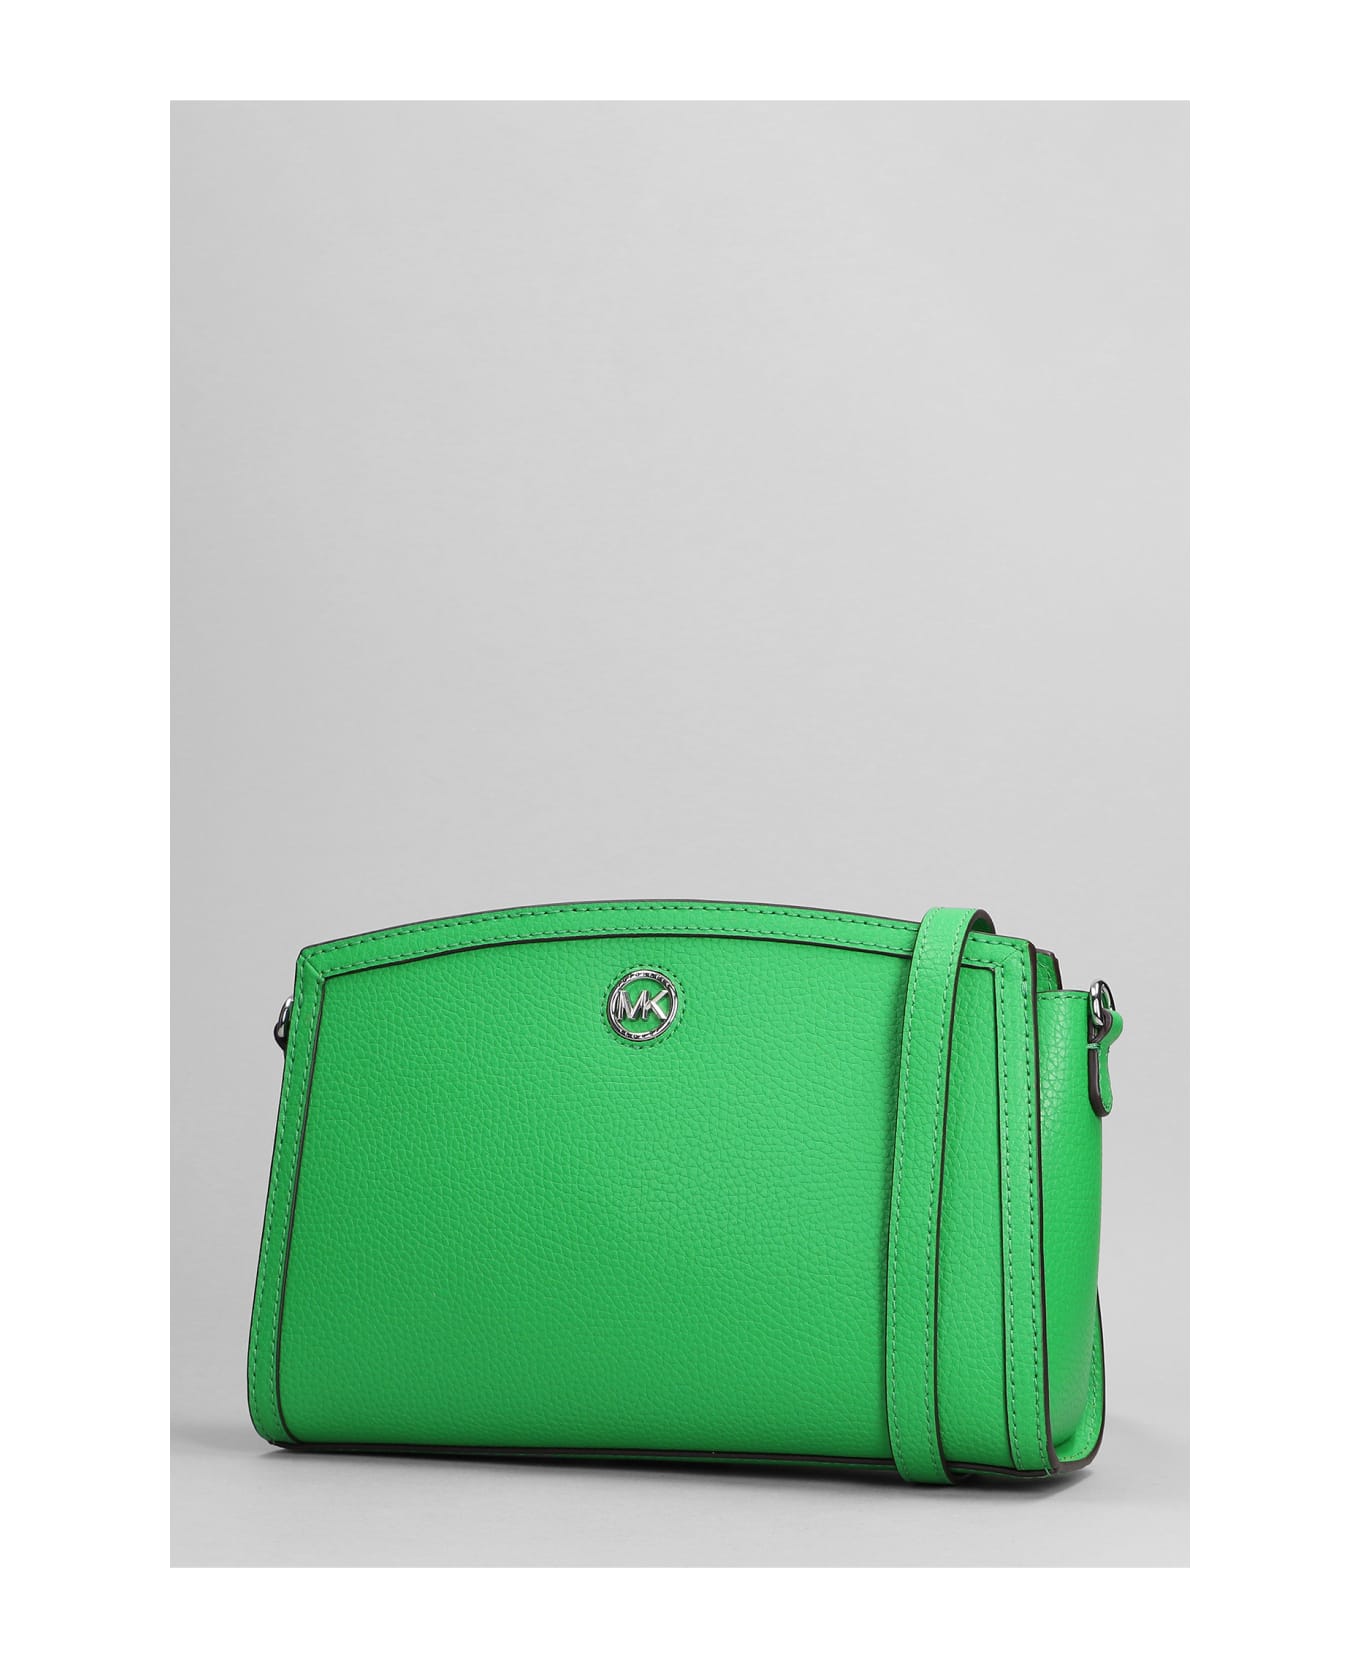 Michael Kors Chantal Shoulder Bag In Green Leather - green